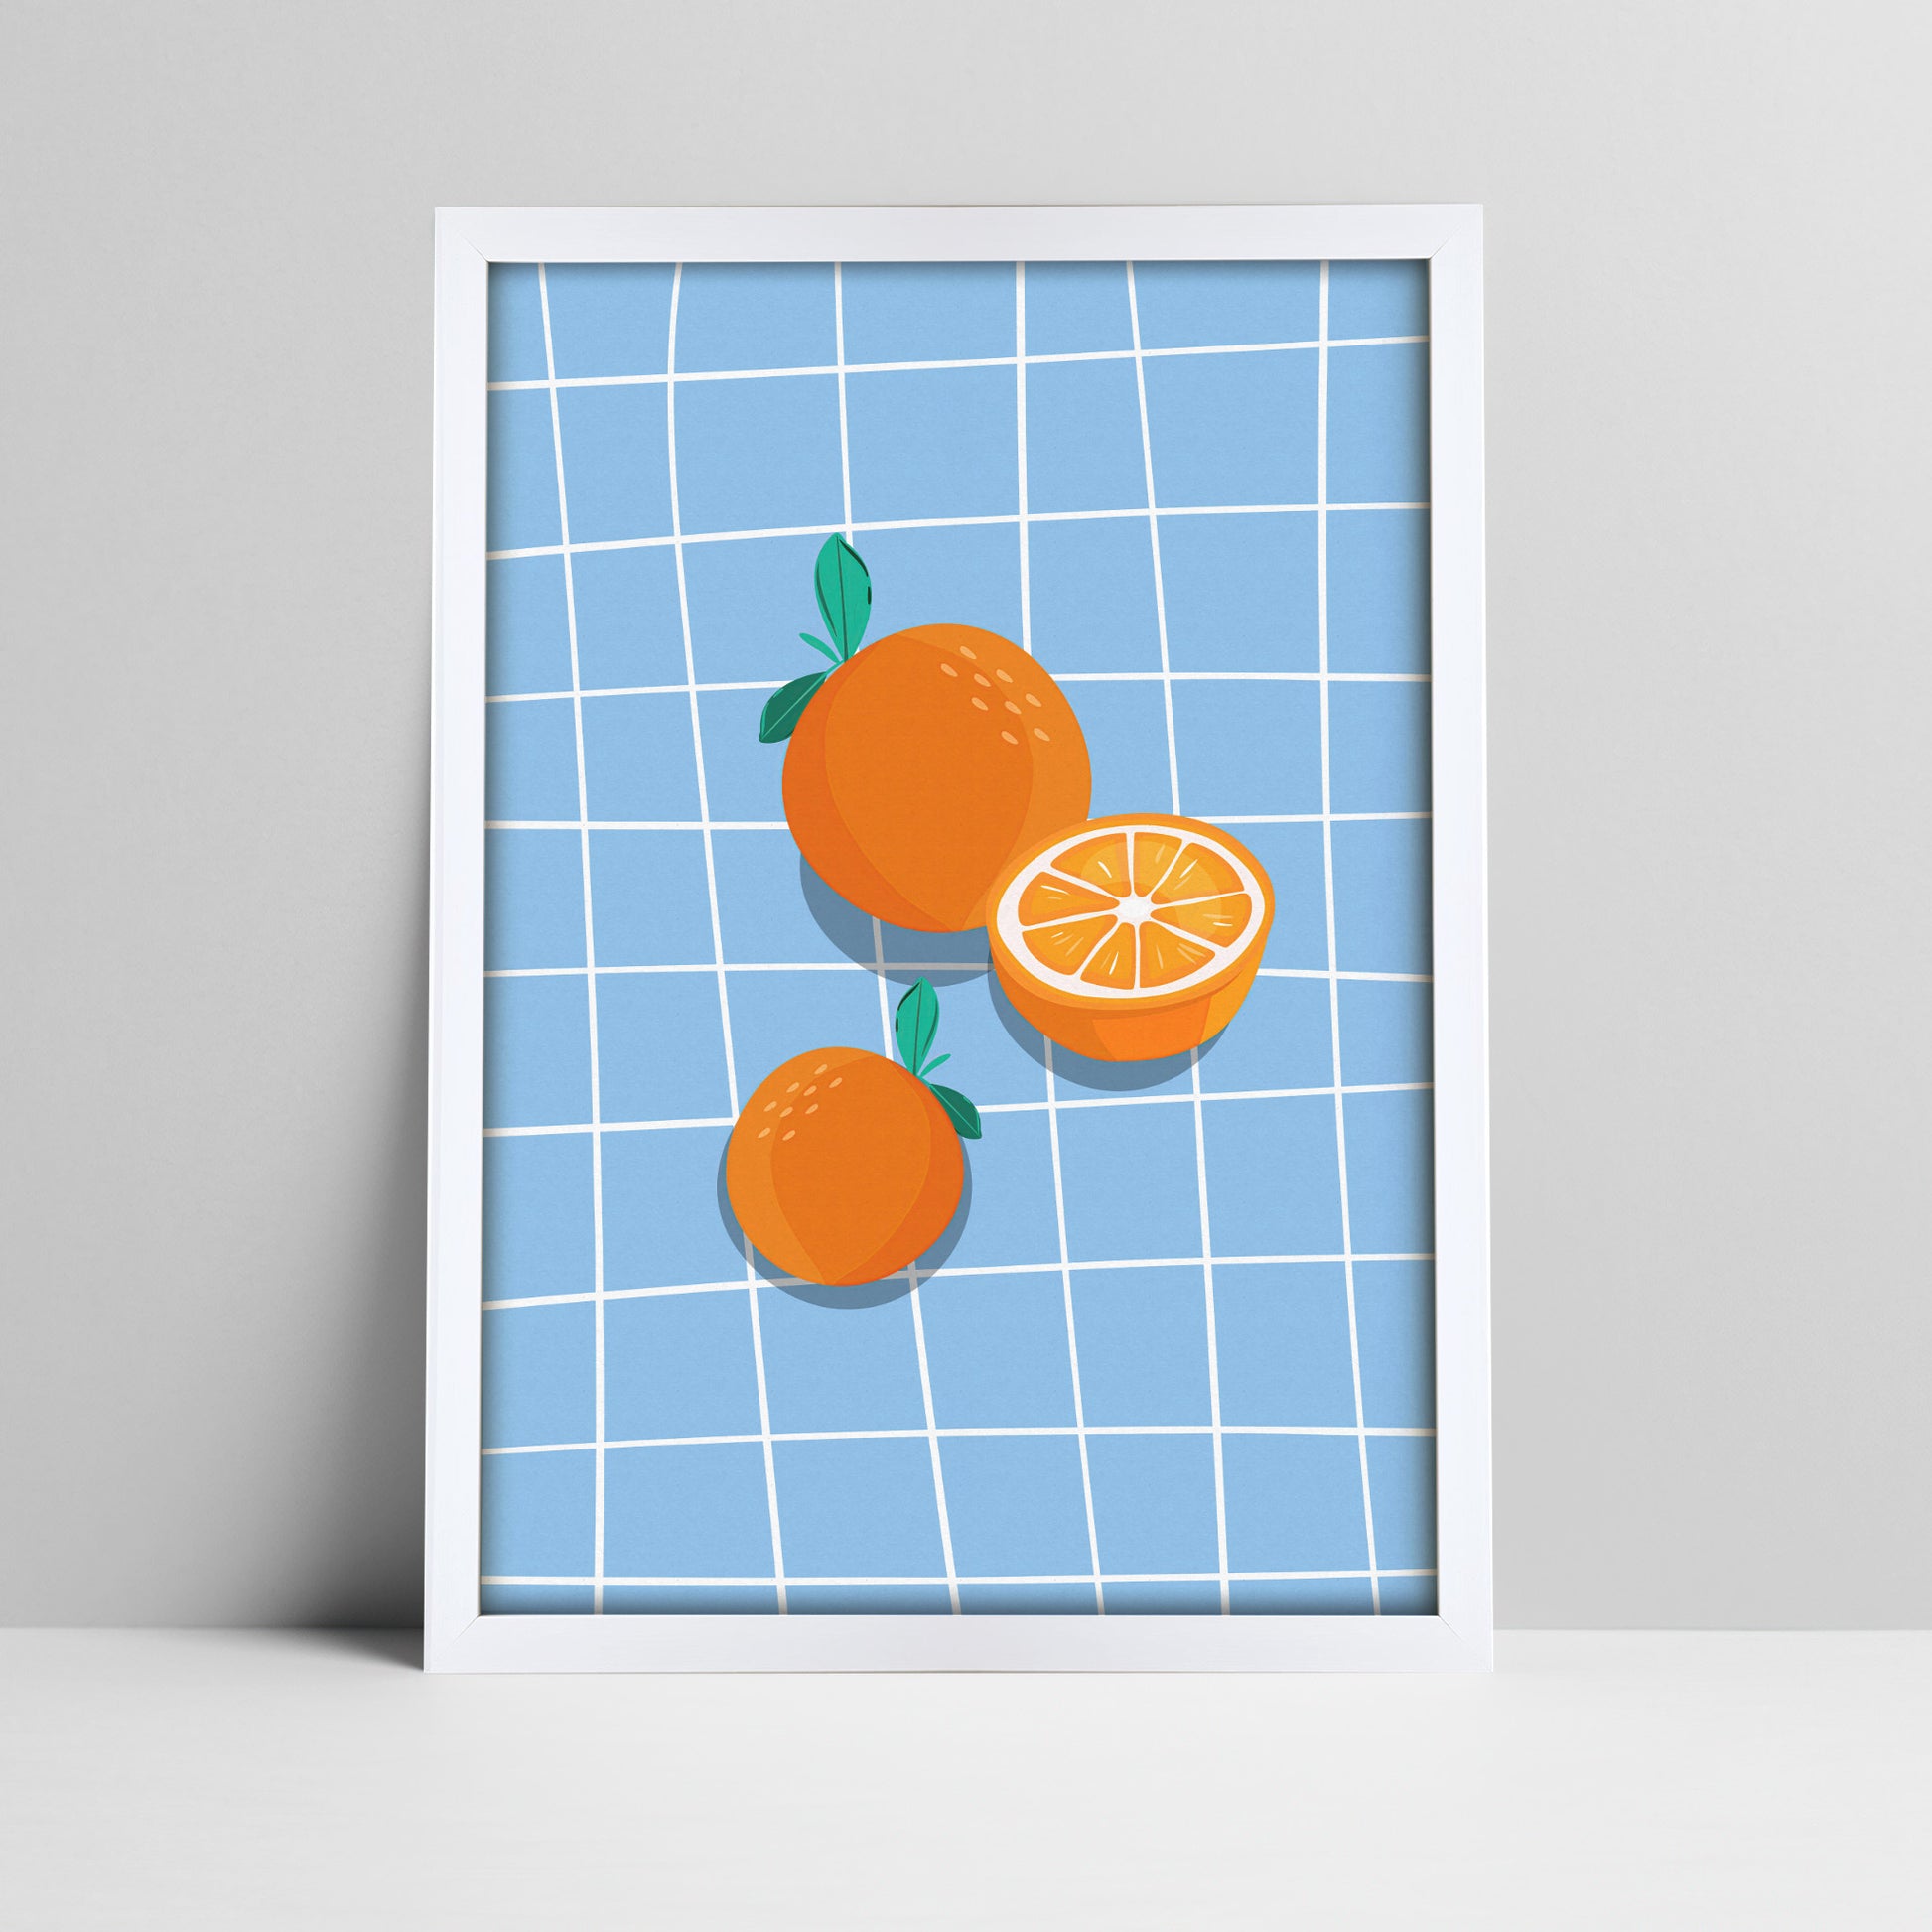 Art print of oranges on blue grid background illustration in a white frame